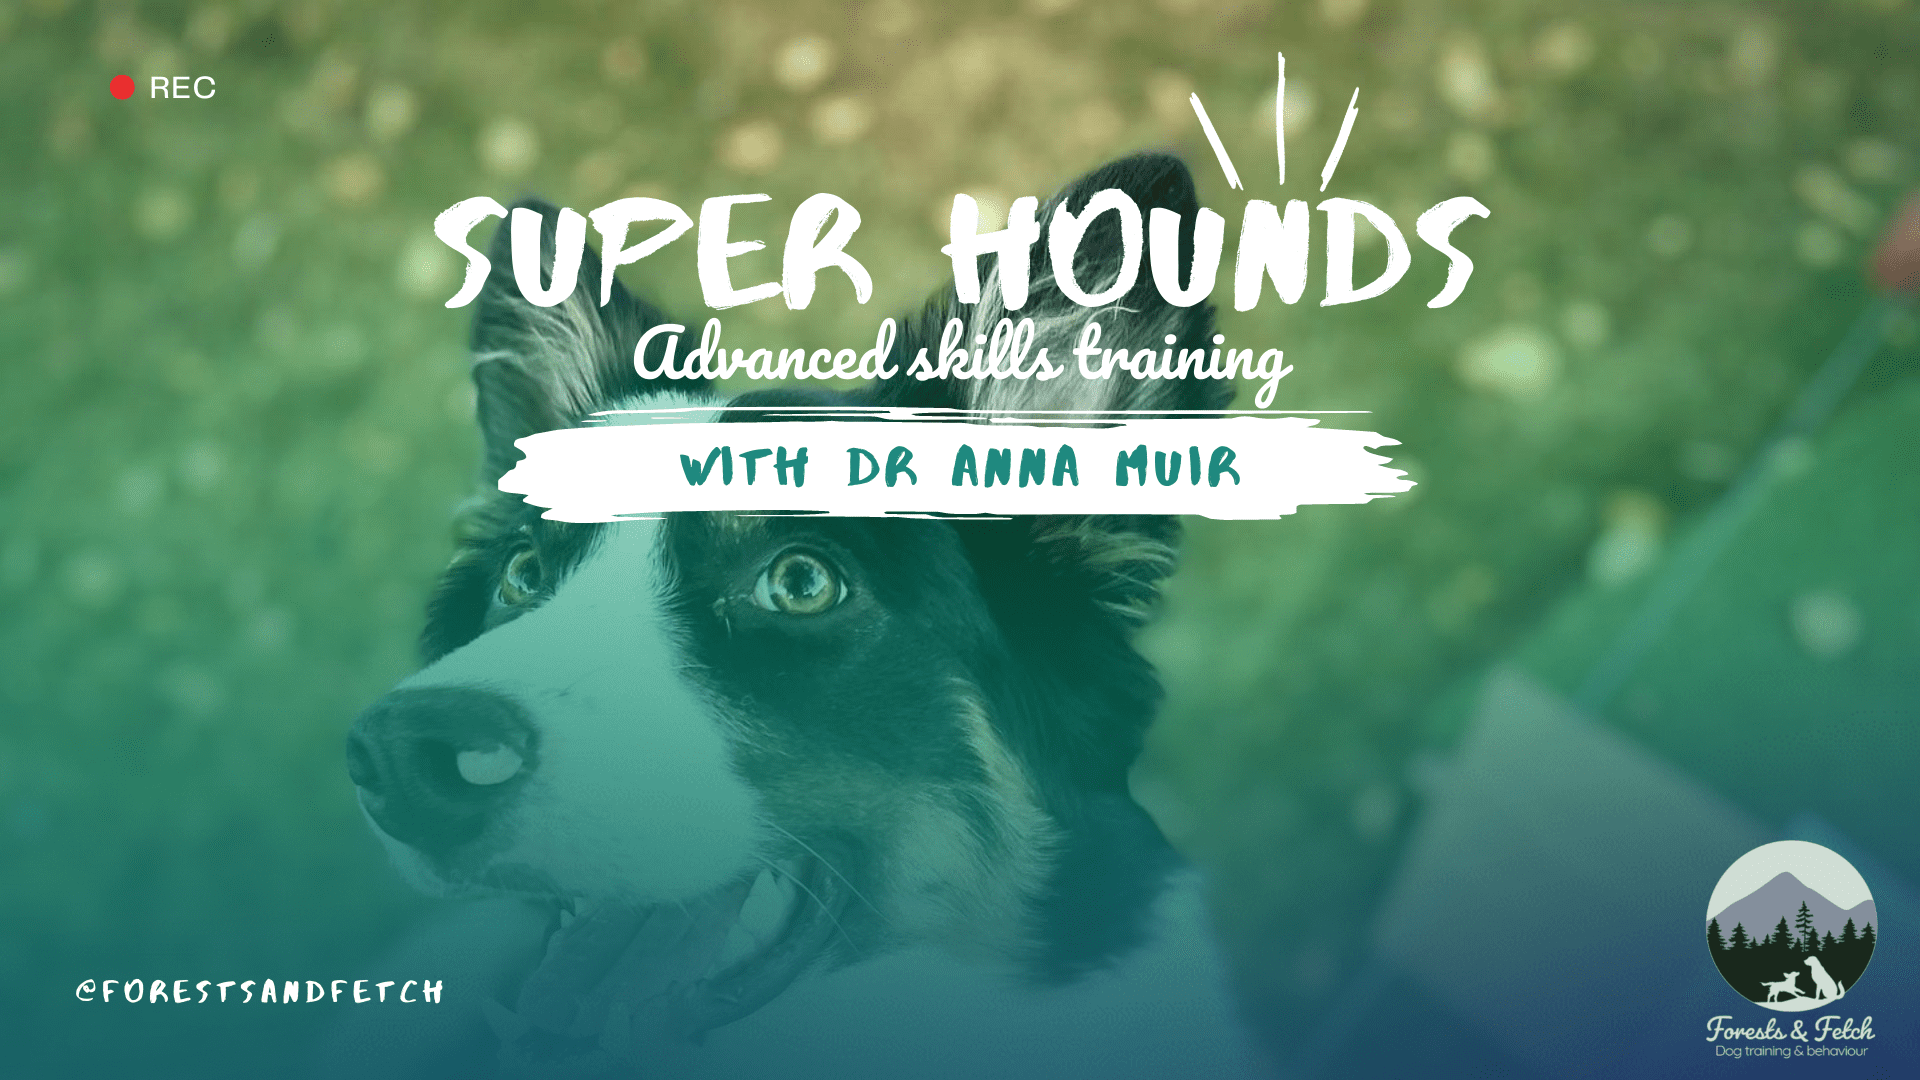 Superhounds! Advanced skills training